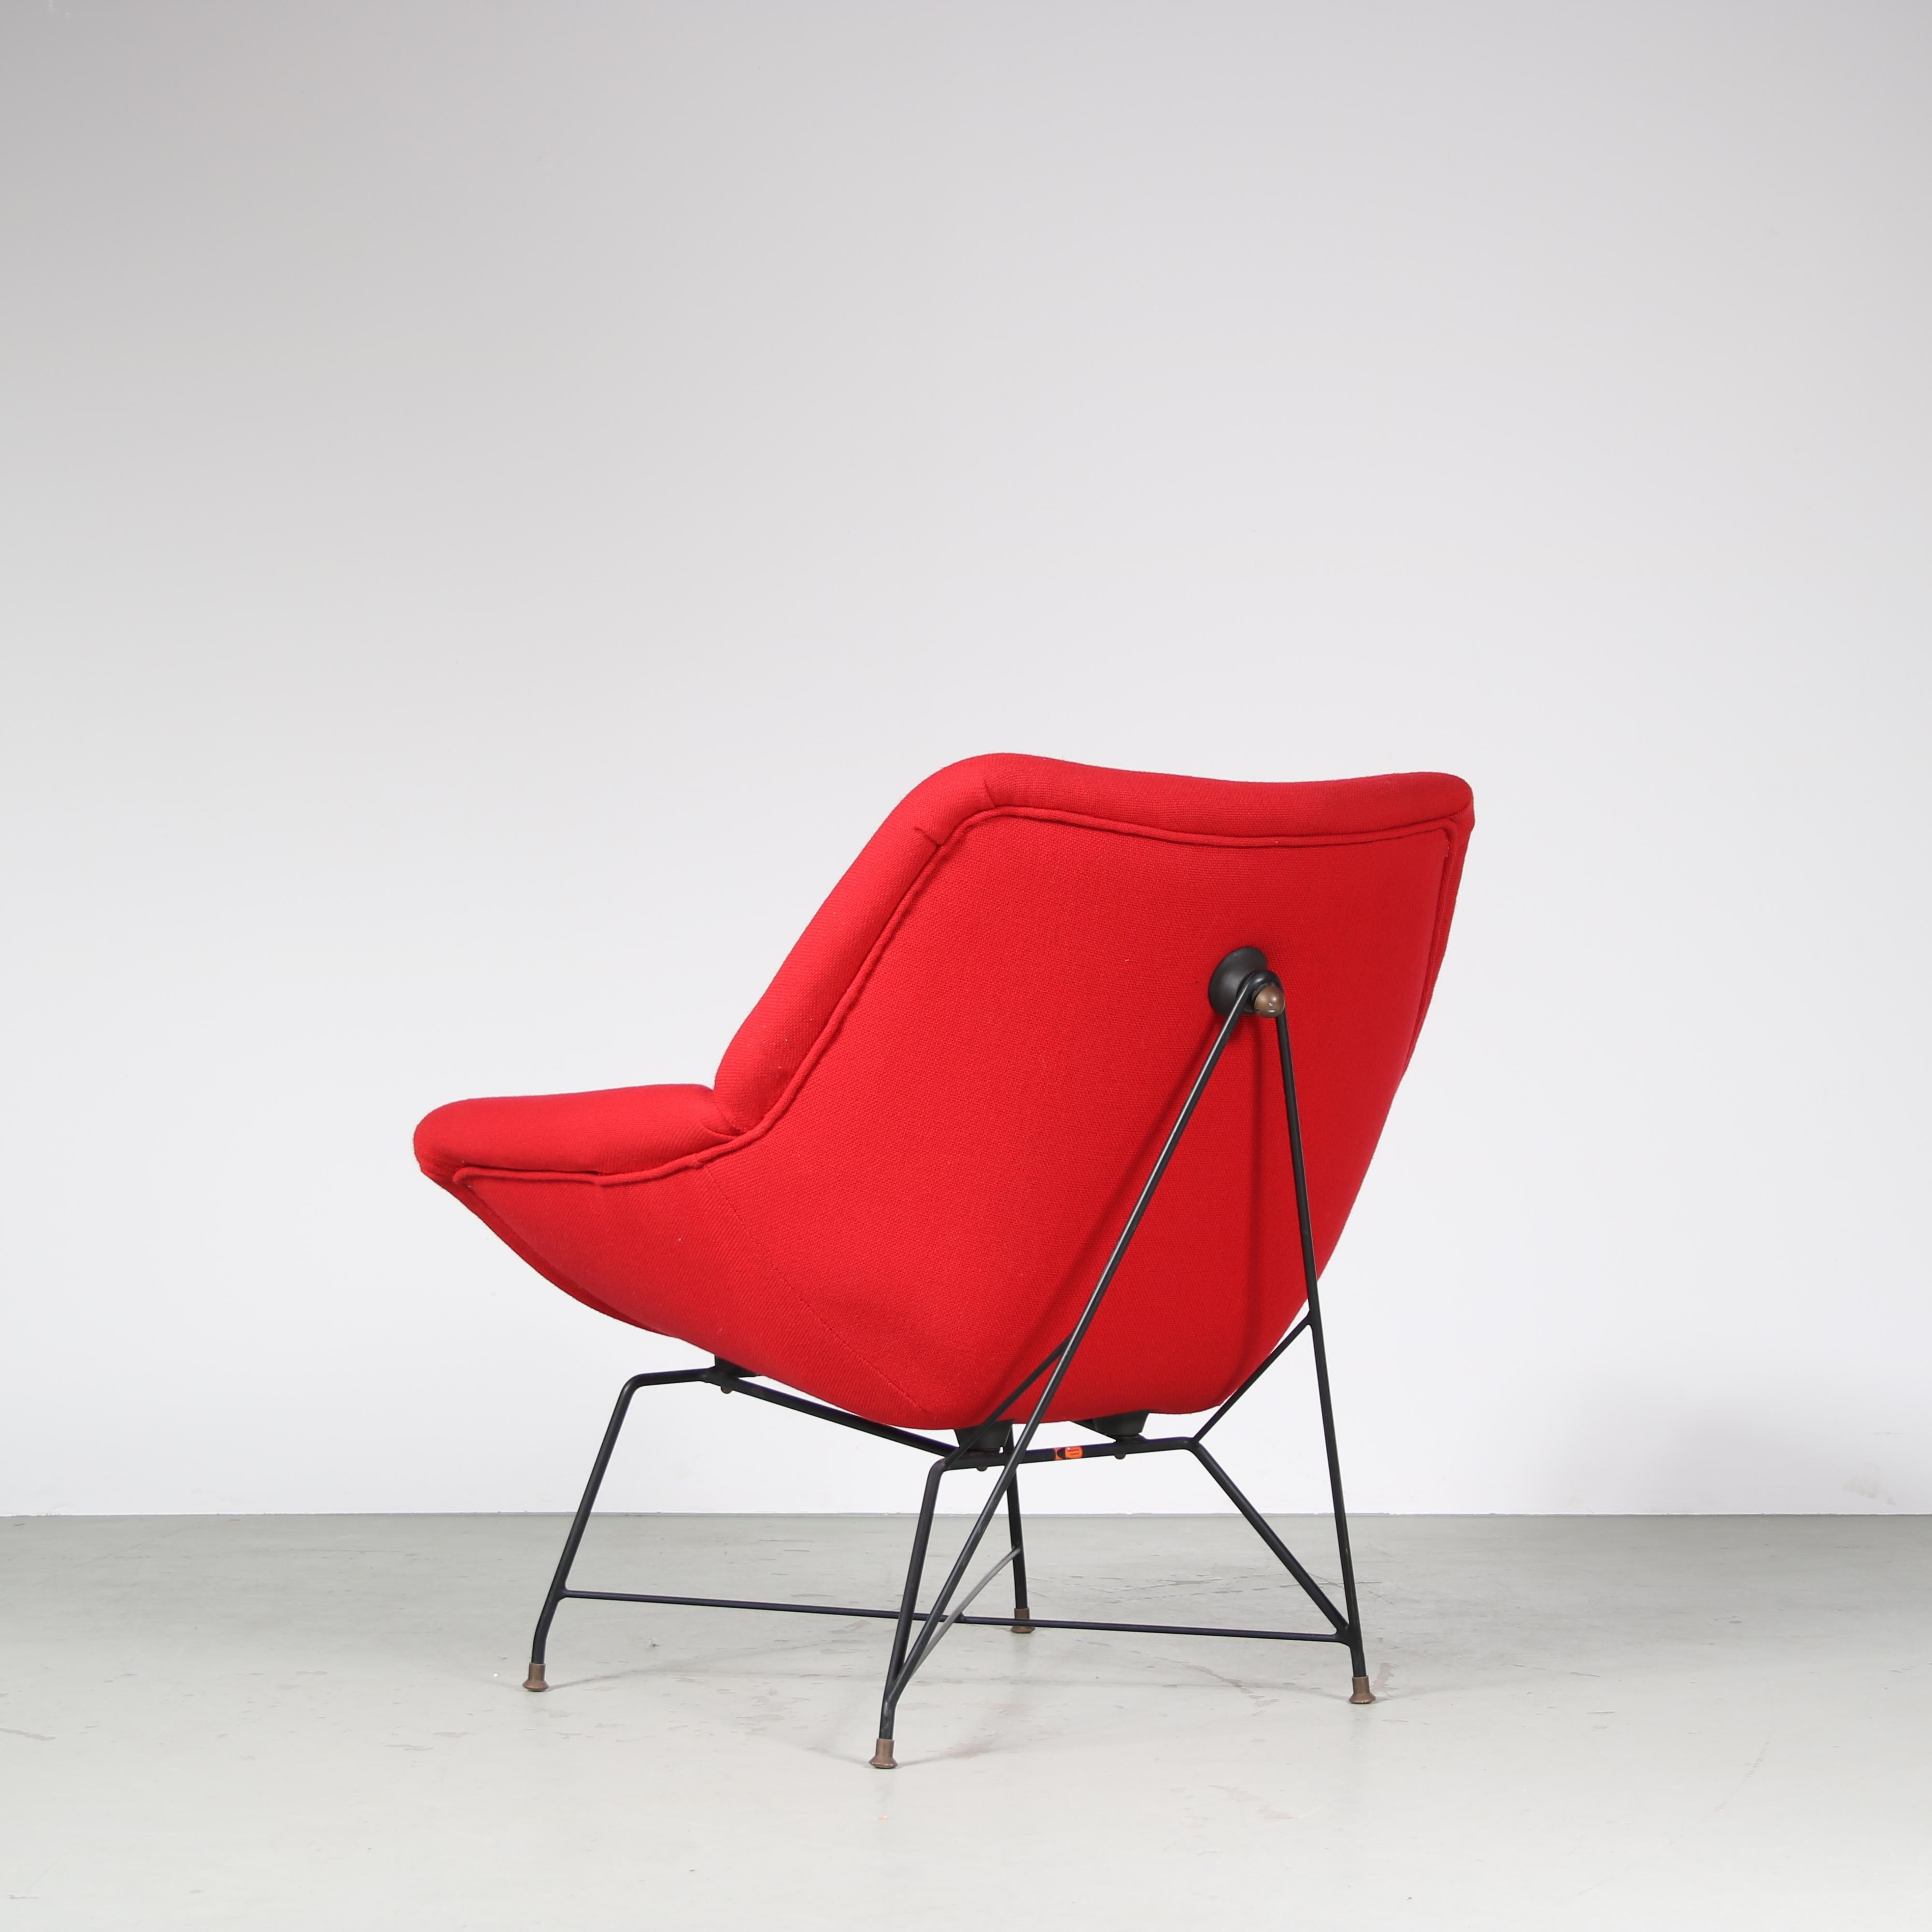 Mid-20th Century “Kosmos” Chair by Augusto Bozzi for Saporiti, Italy 1950